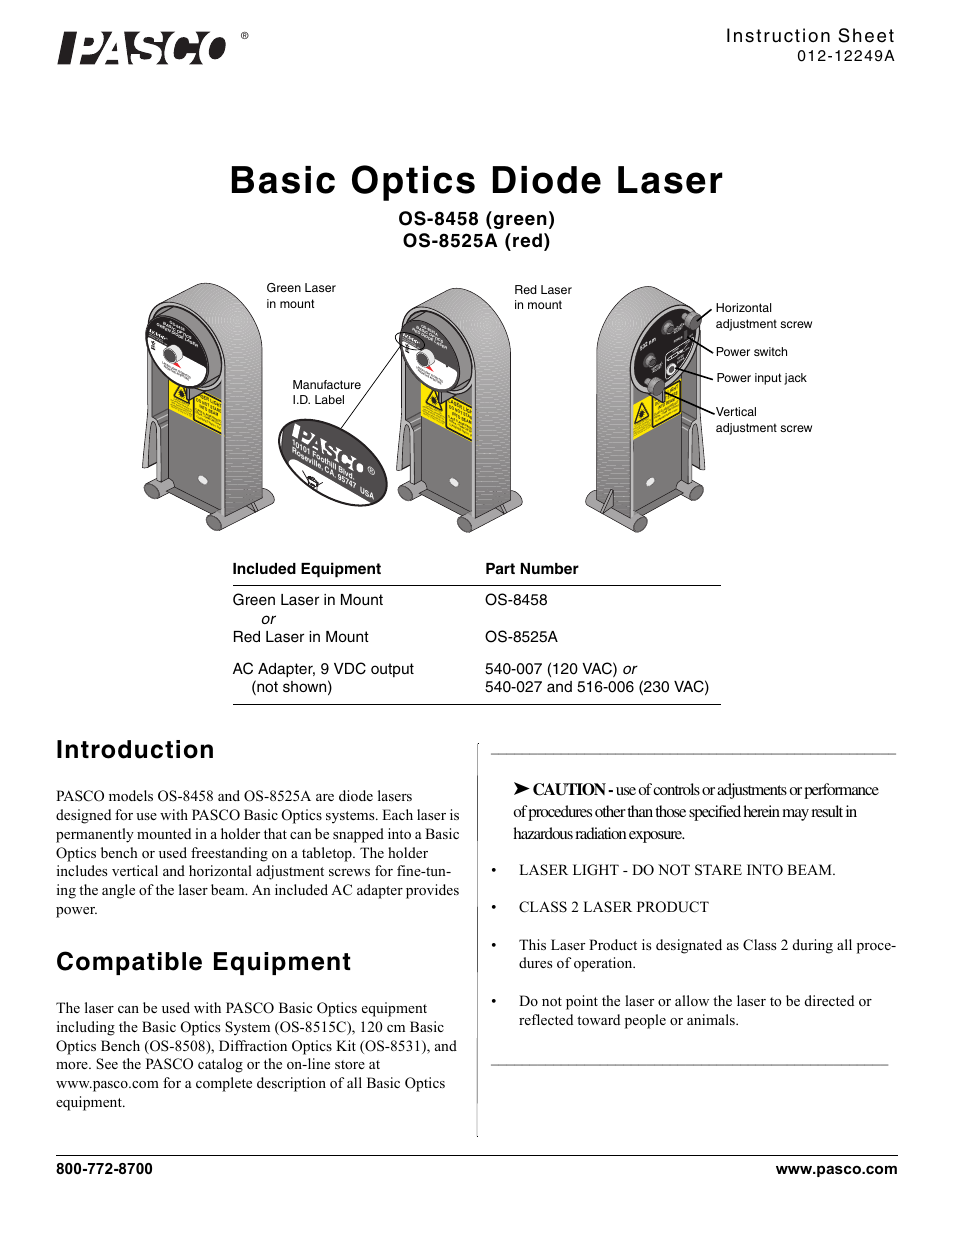 PASCO OS-8525A Basic Optics Diode Laser User Manual | 2 pages | Also for: OS-8458  Basic Optics Diode Laser